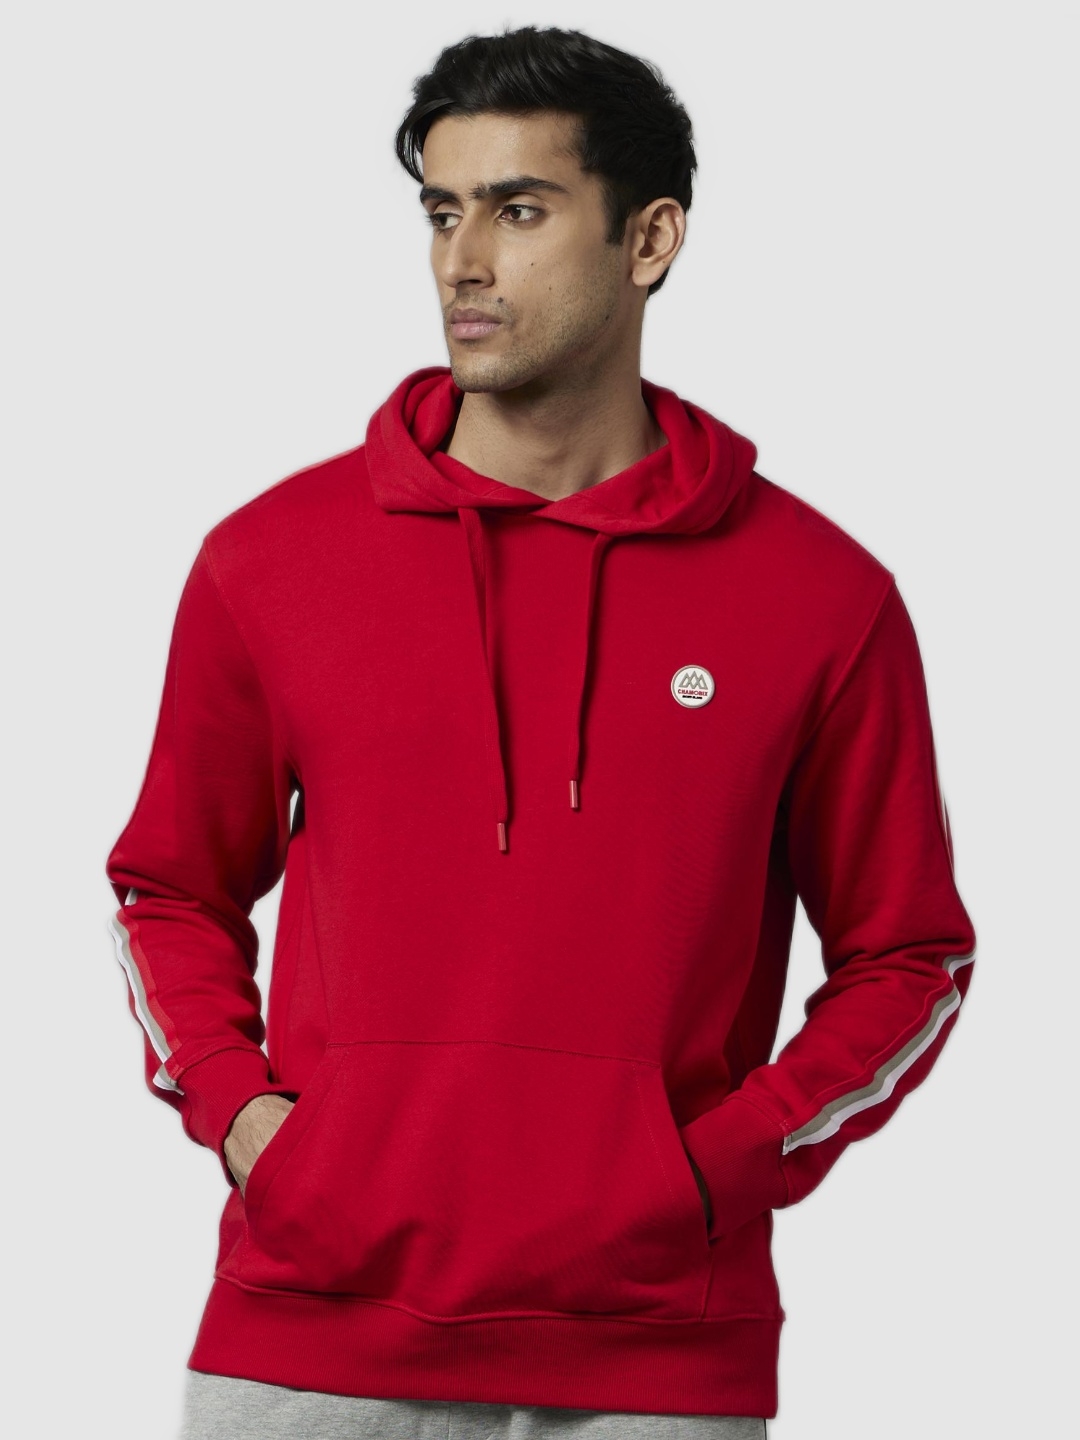 Chamonix-Mont-Blanc Solid Red Full-Sleeve Hooded Sweatshirt